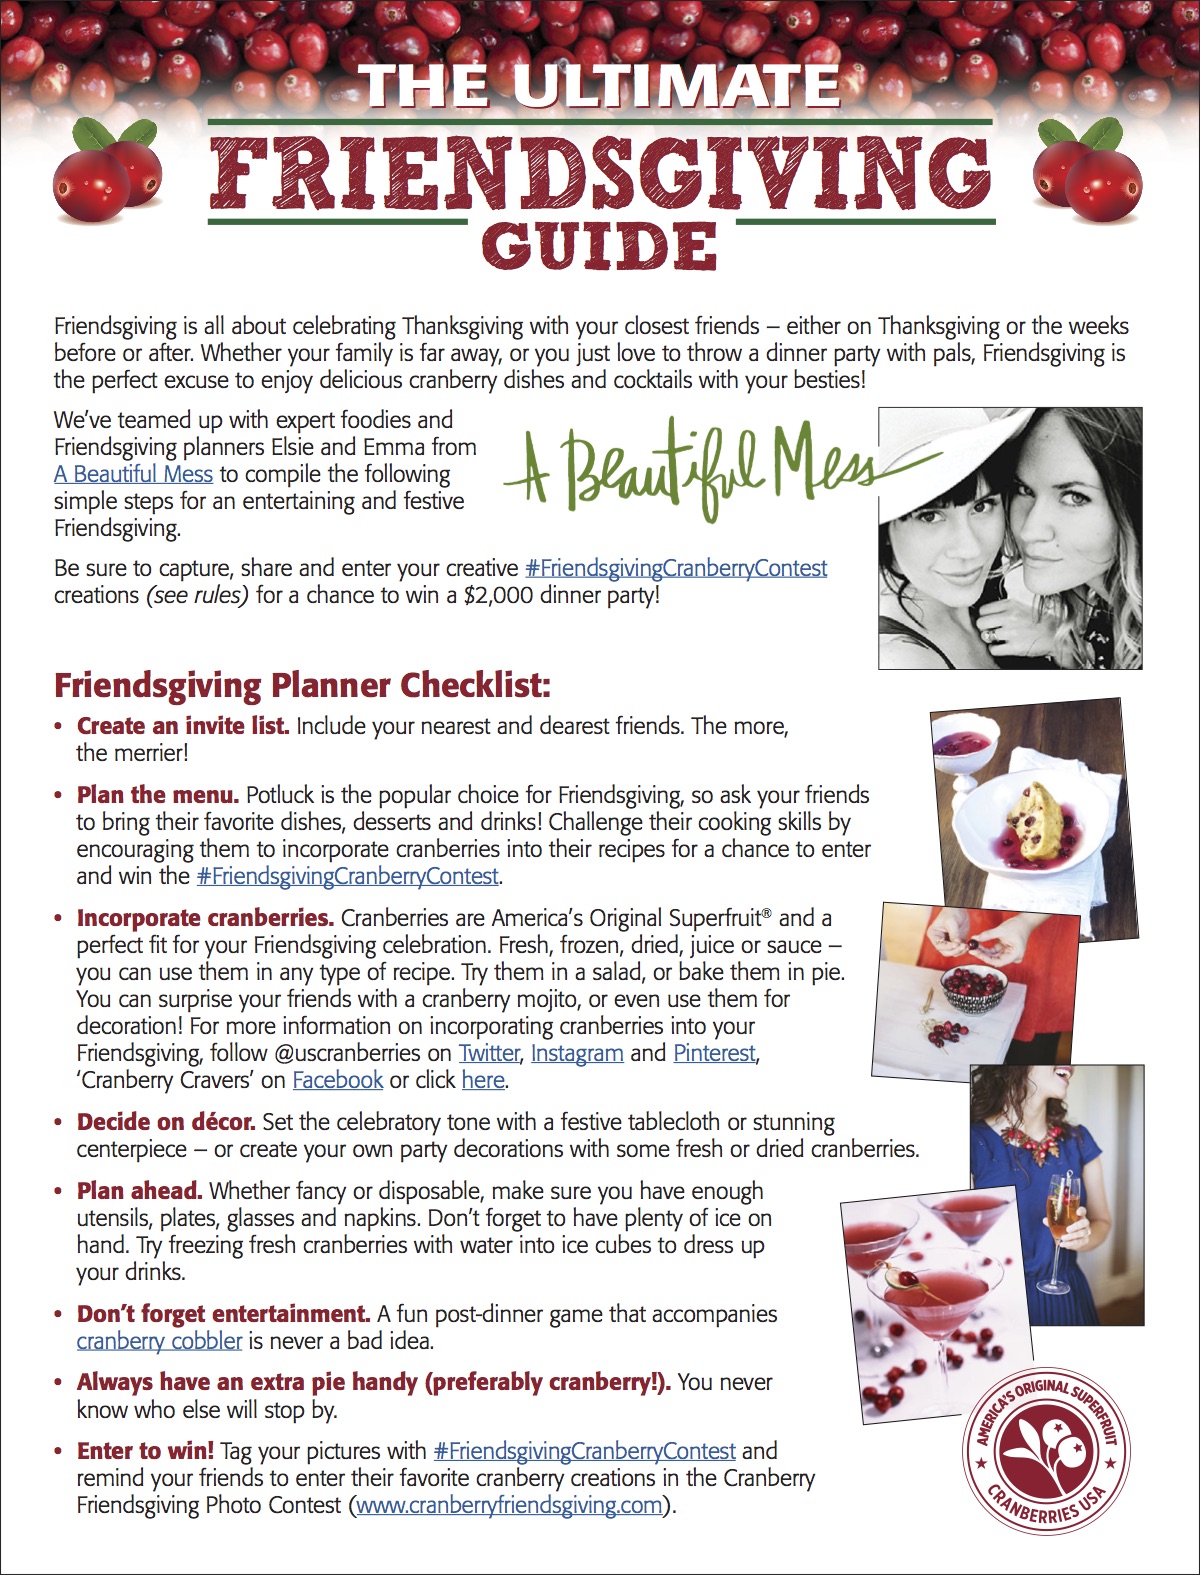 Cranberry Friendsgiving Guide